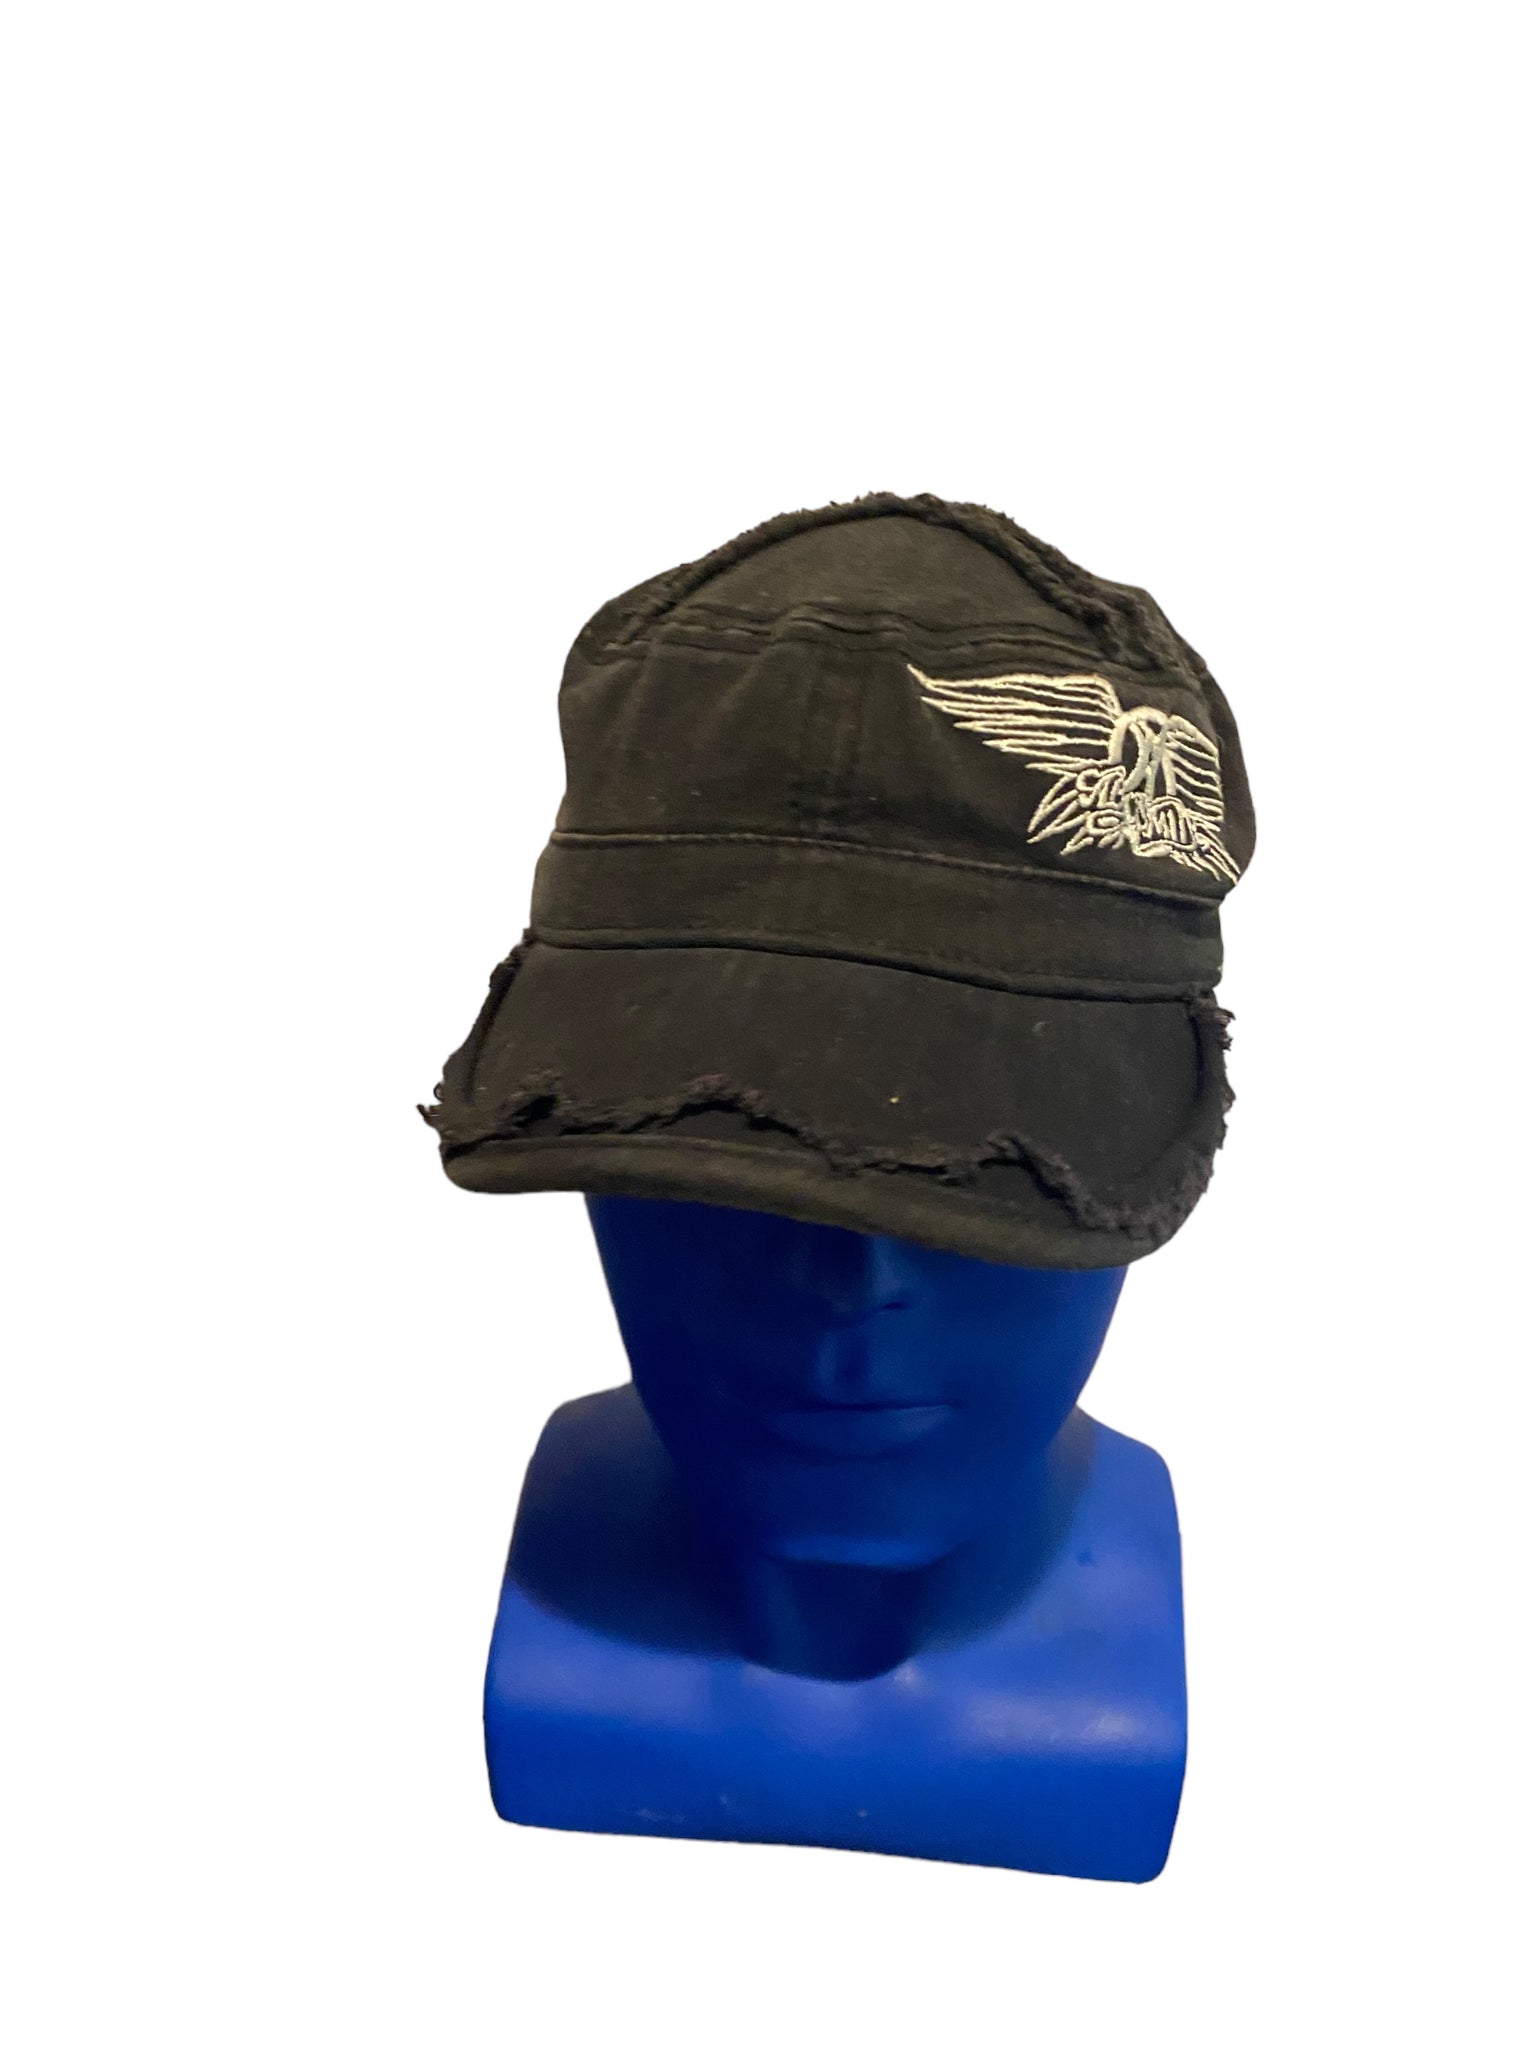 Disney Aerosmith Rock'n Roller Coaster Army Hat Black Embroidered Distressed Adj